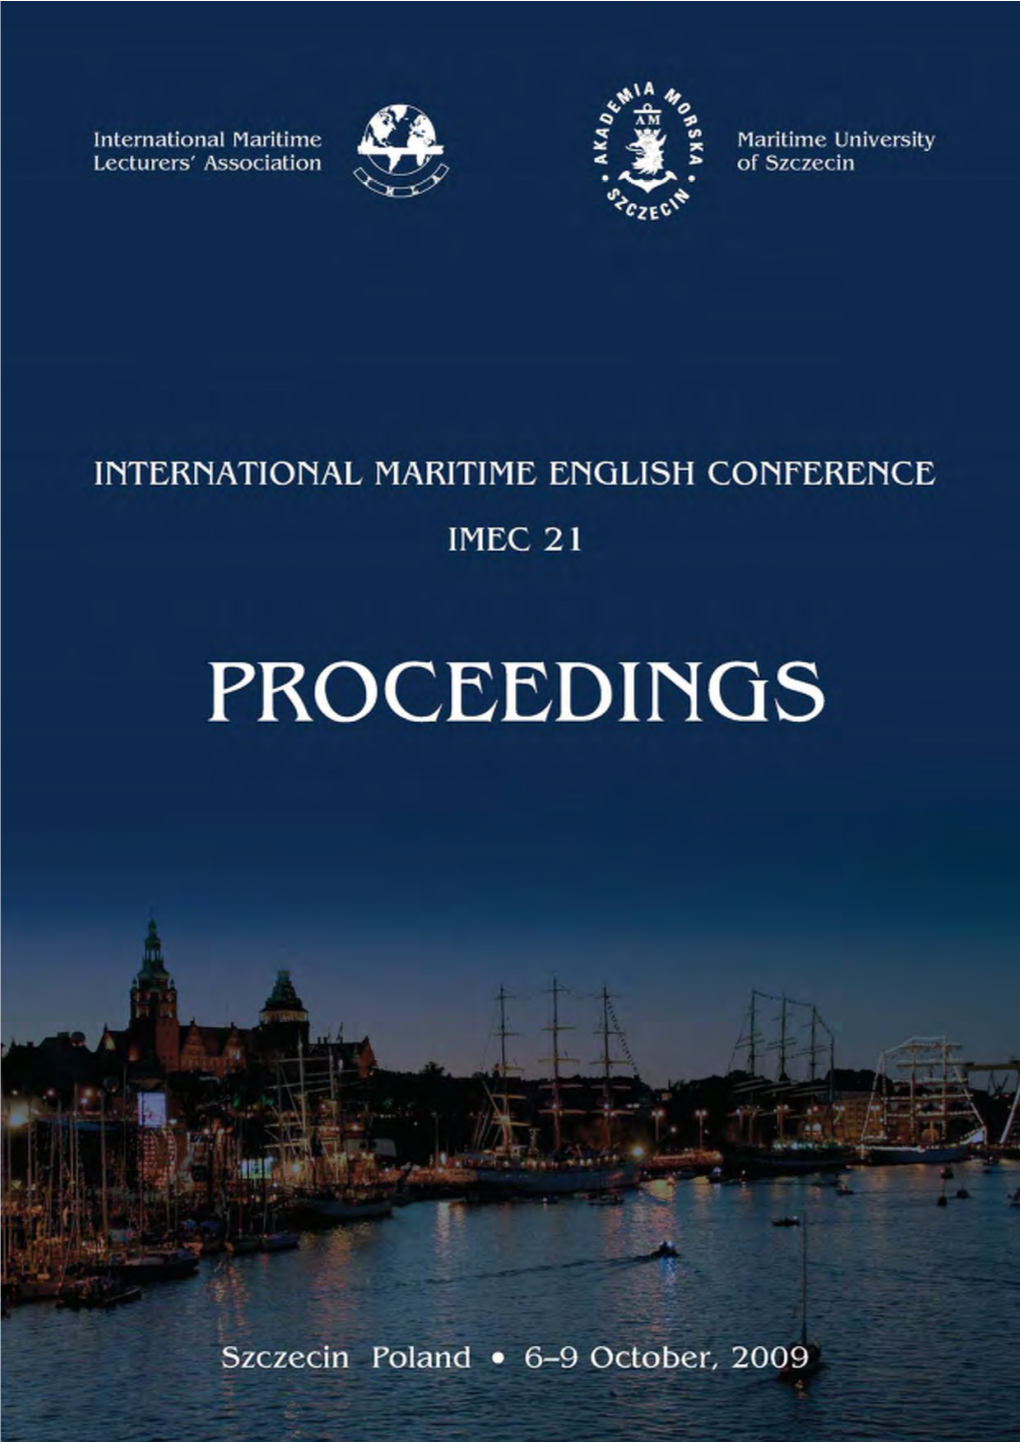 IMEC-21 Proceedings